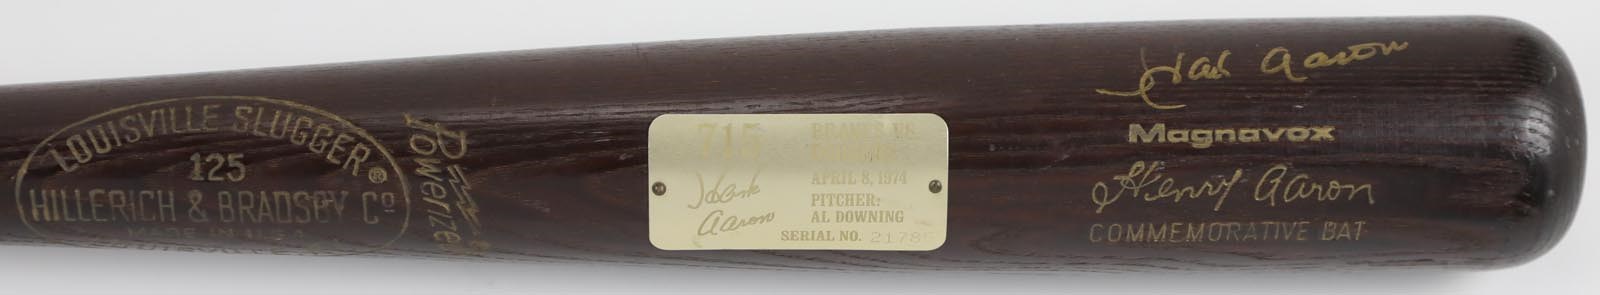 - 1974 Magnavox Commemorative 715 Home Run Bat Signed by Hank Aaron